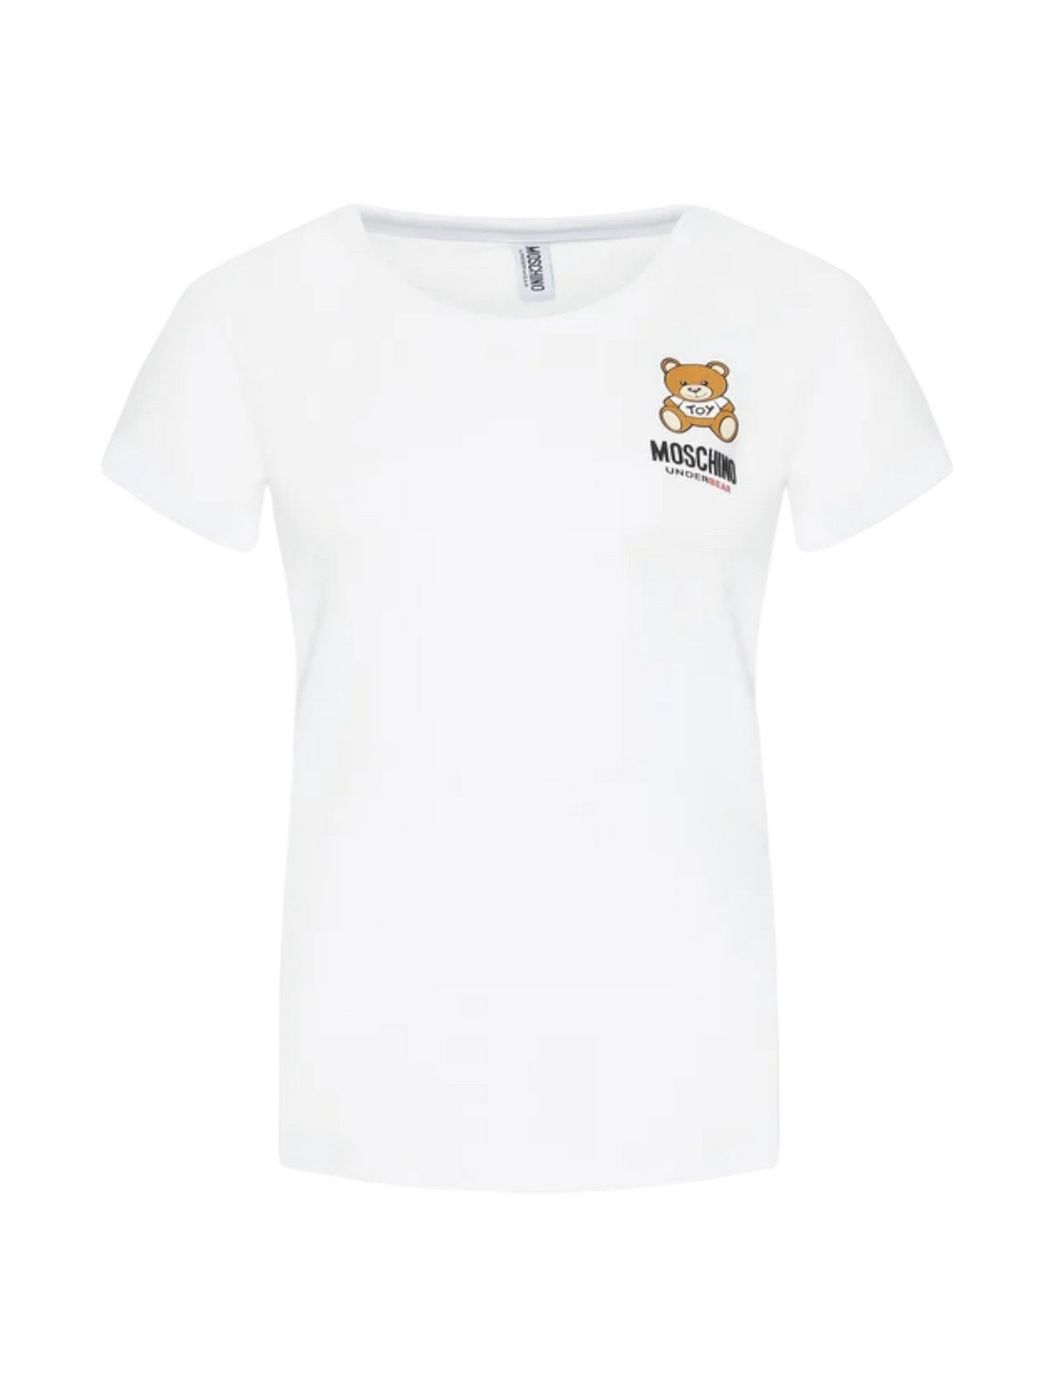 MOSCHINO UNDERWEAR T-Shirt e Polo Donna  ZUA1912 9003 0001 Bianco